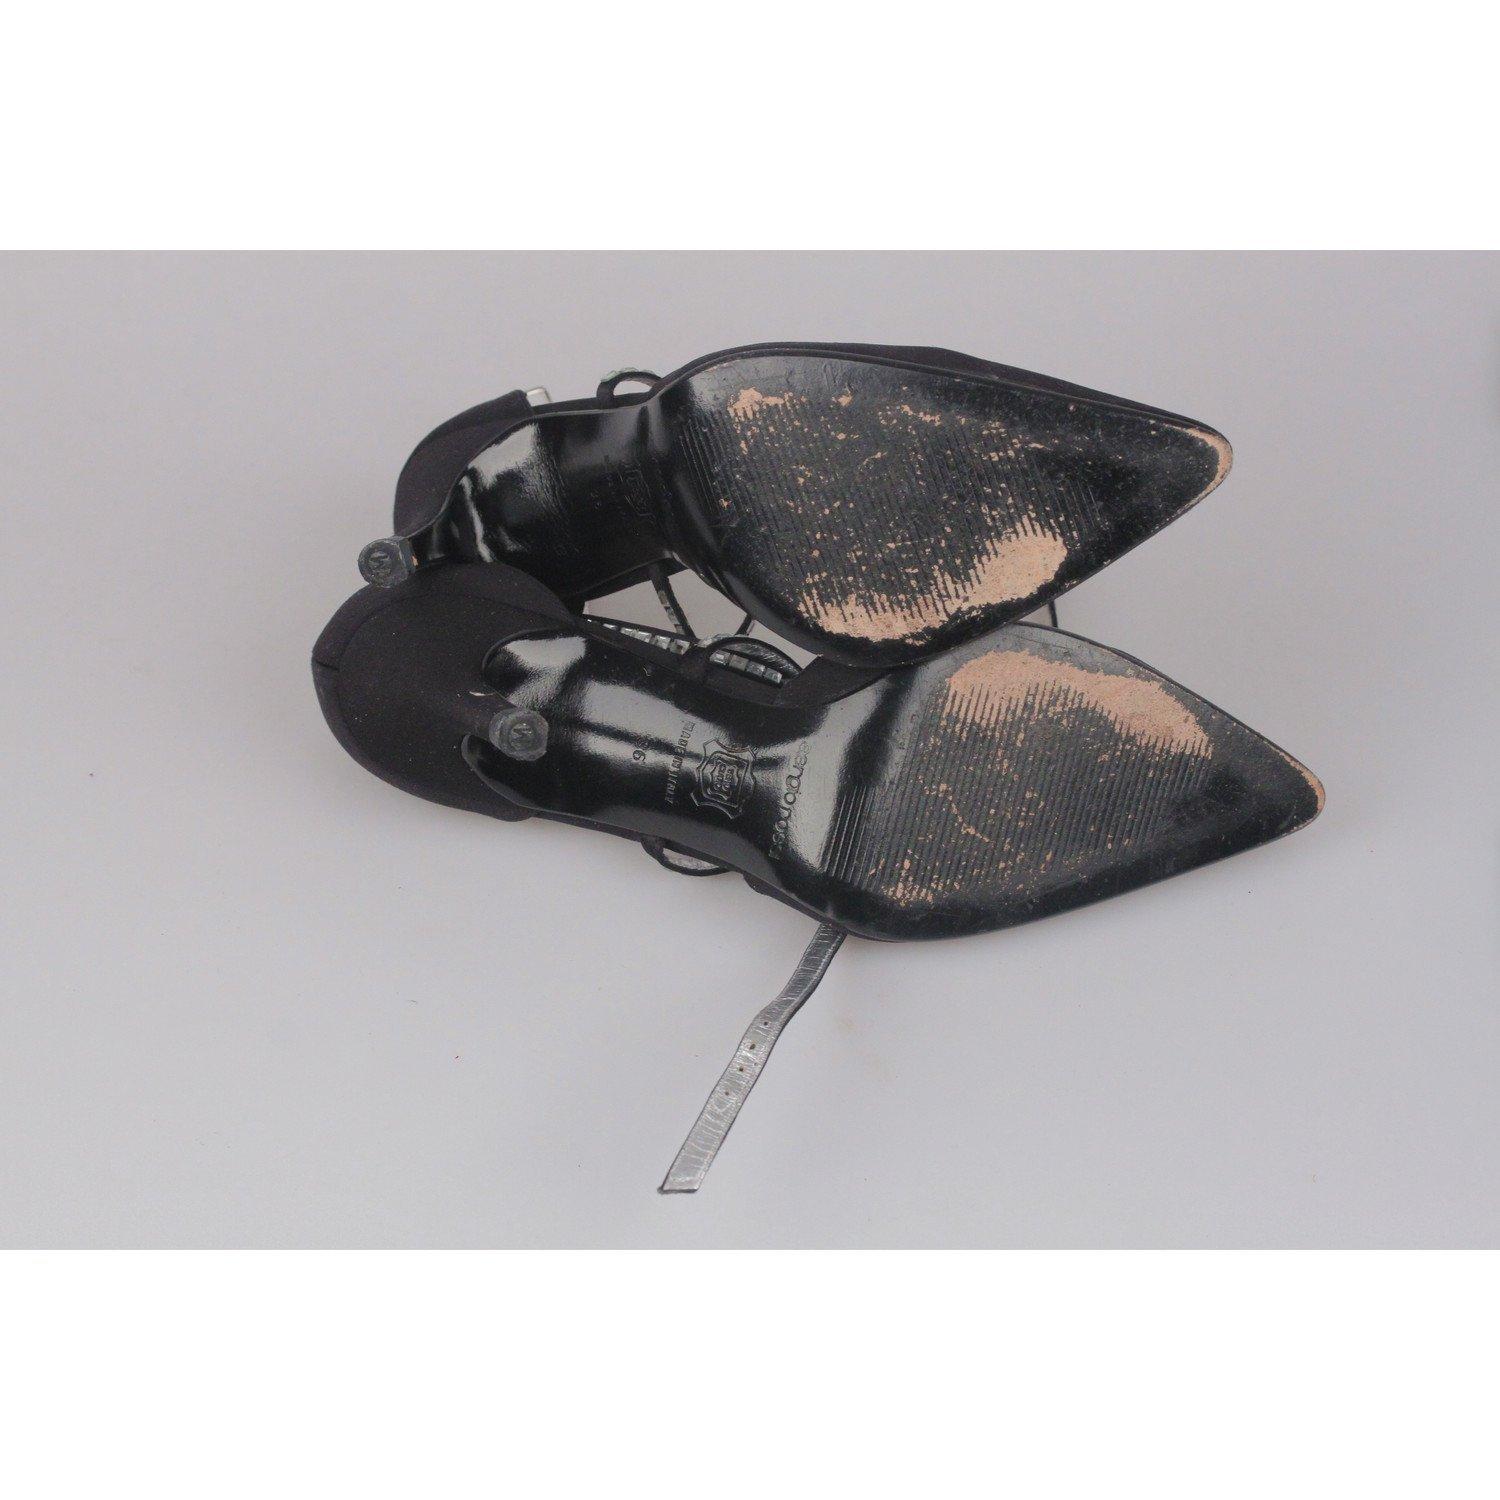 SERGIO ROSSI BlackFabric D'Orsay Shoes HEELS PUMPS with Crystals 36 IT 4